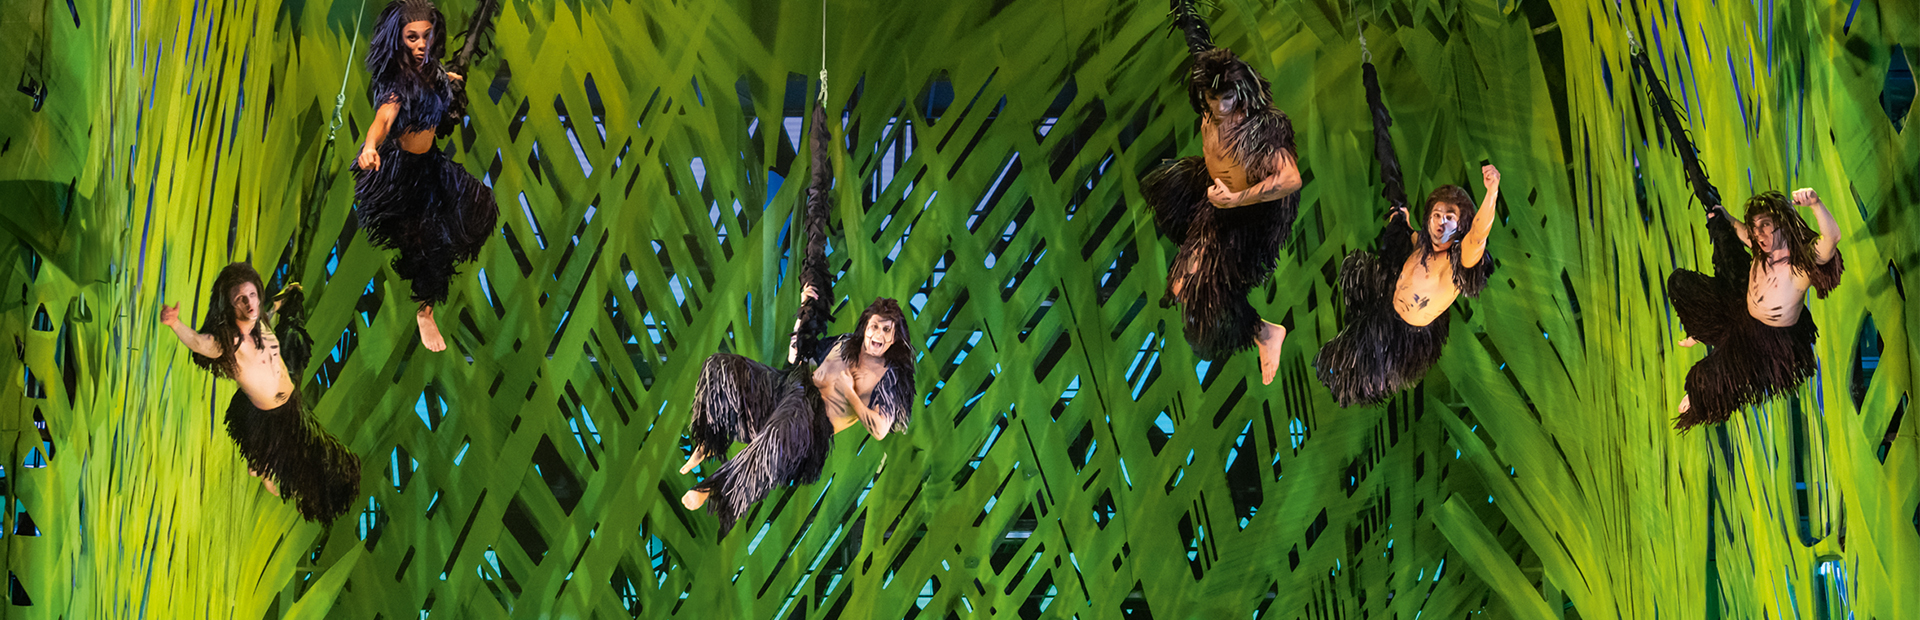 Gorilla family from Tarzan on vines